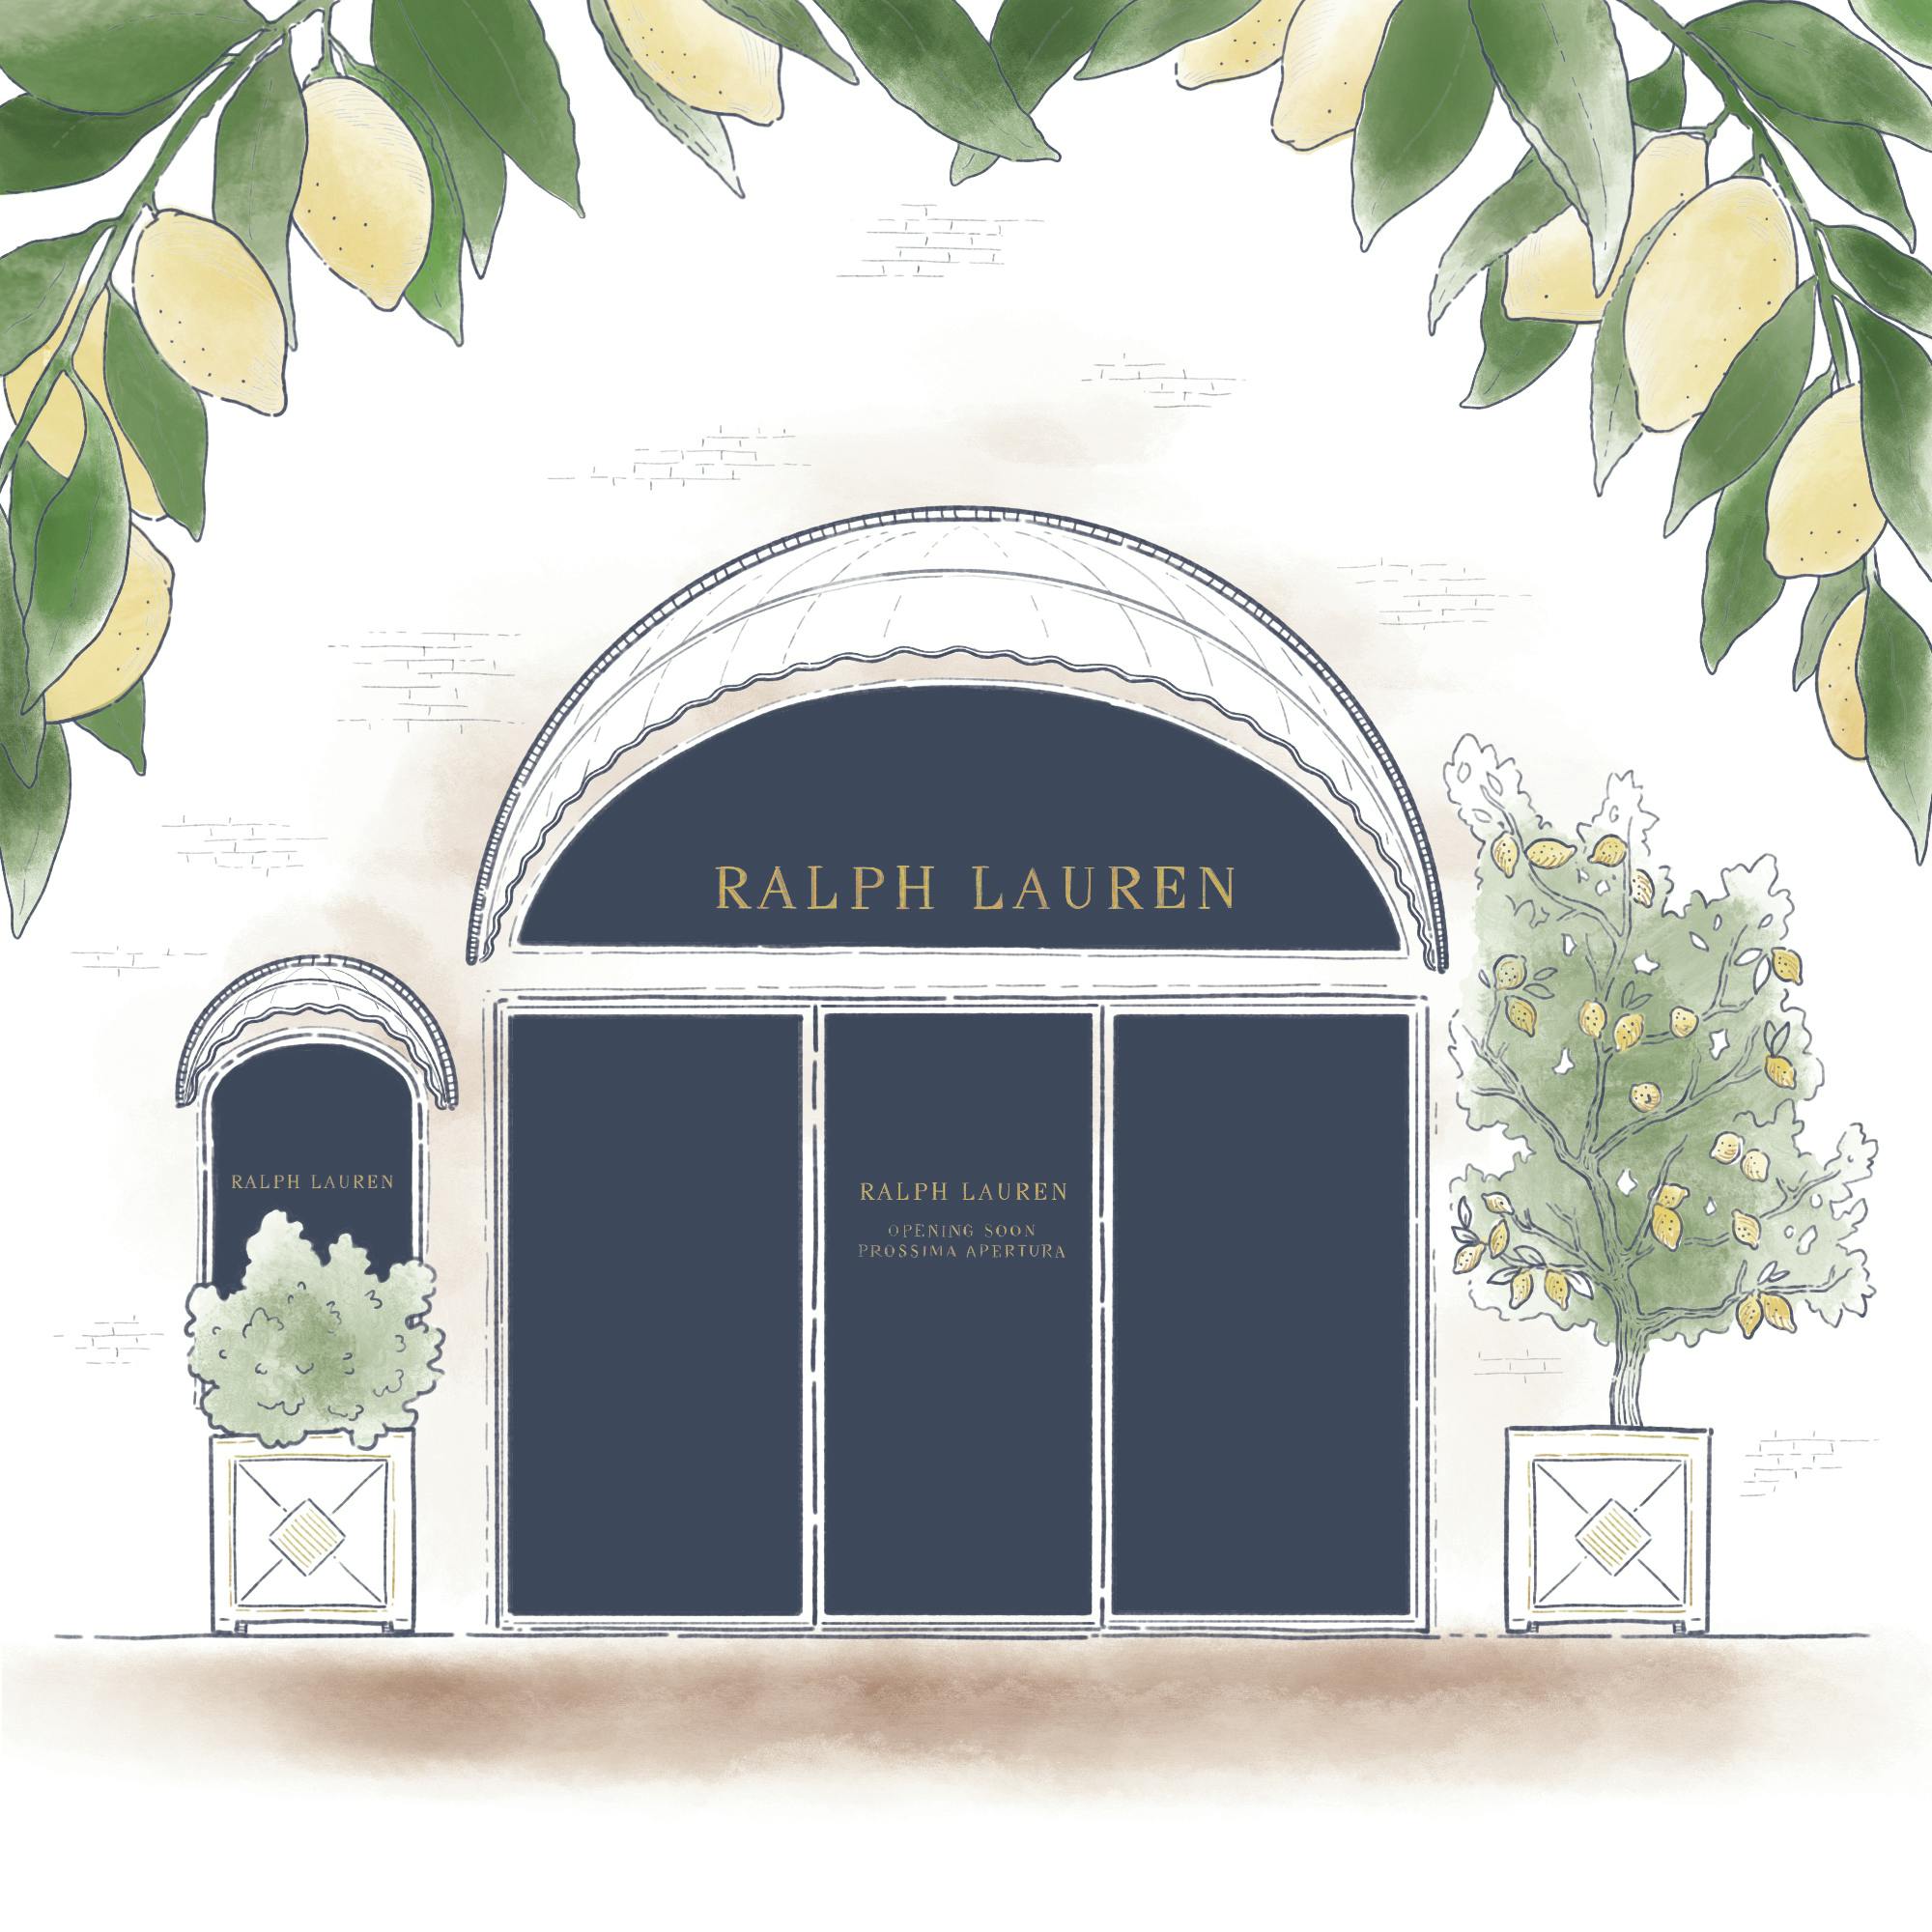 Opening shop card illustration for Ralph Lauren in Capri